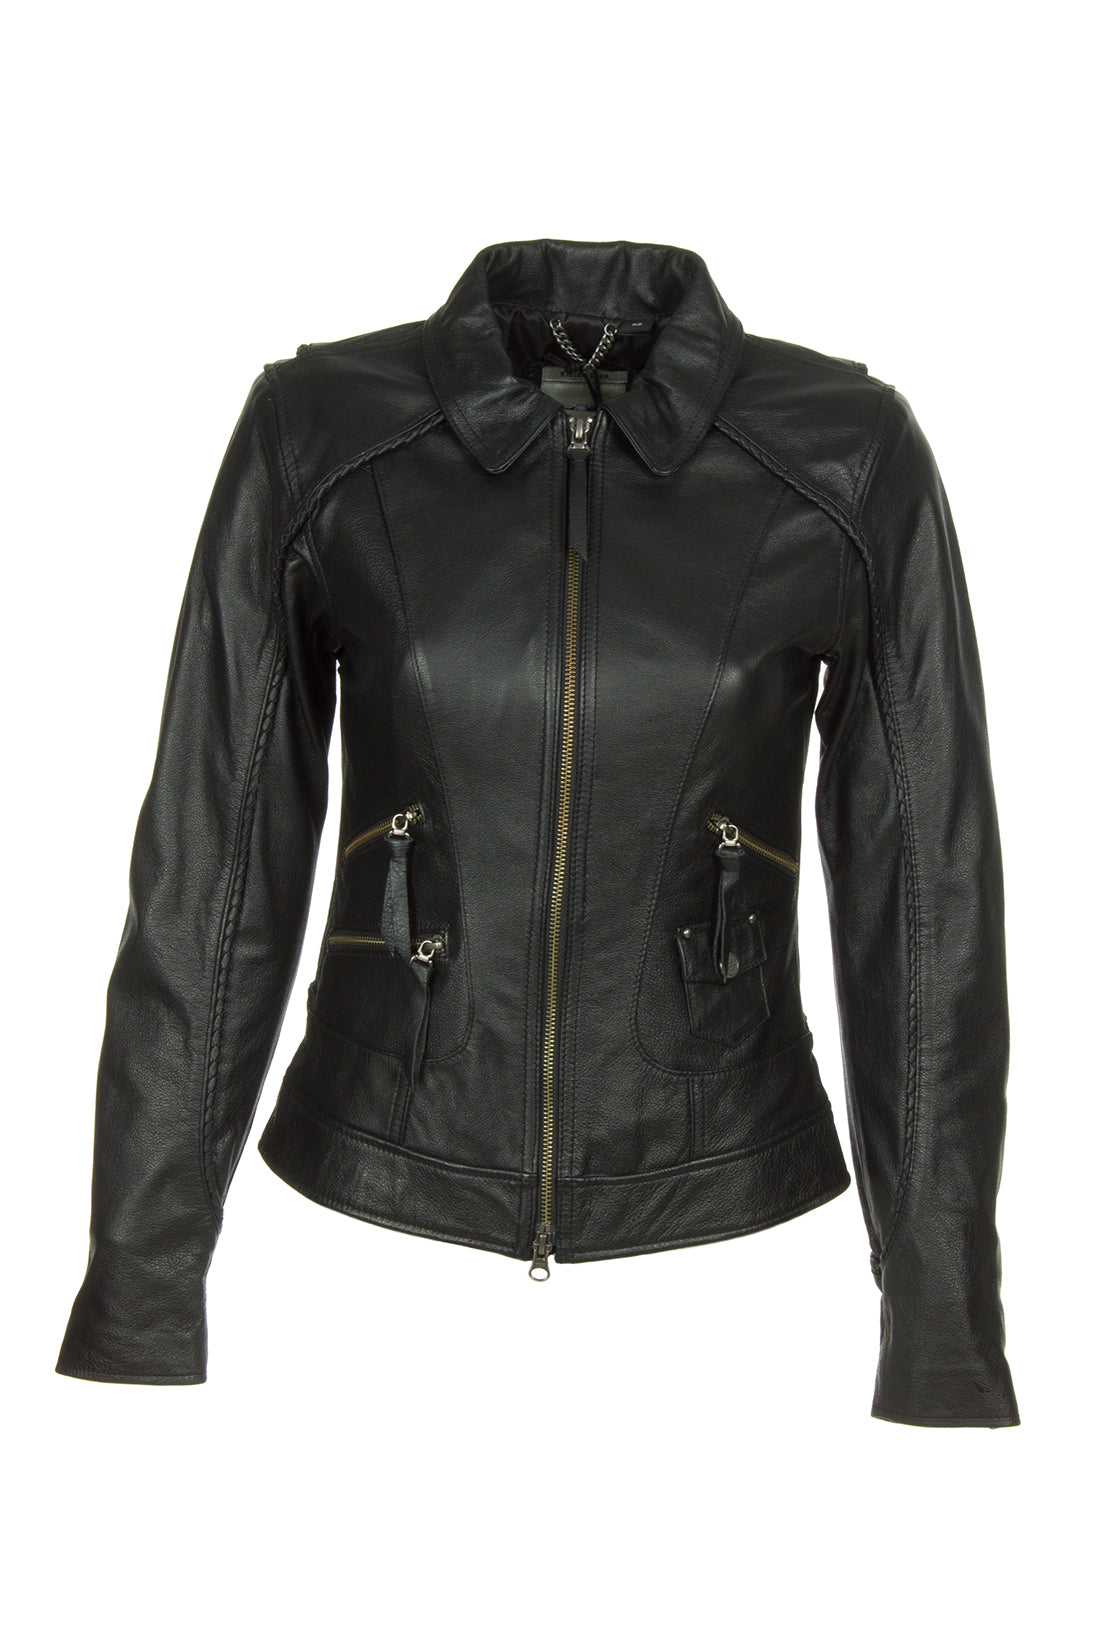 Harley-Davidson 98064-13VW Women's Jacket Heritage Black Leather